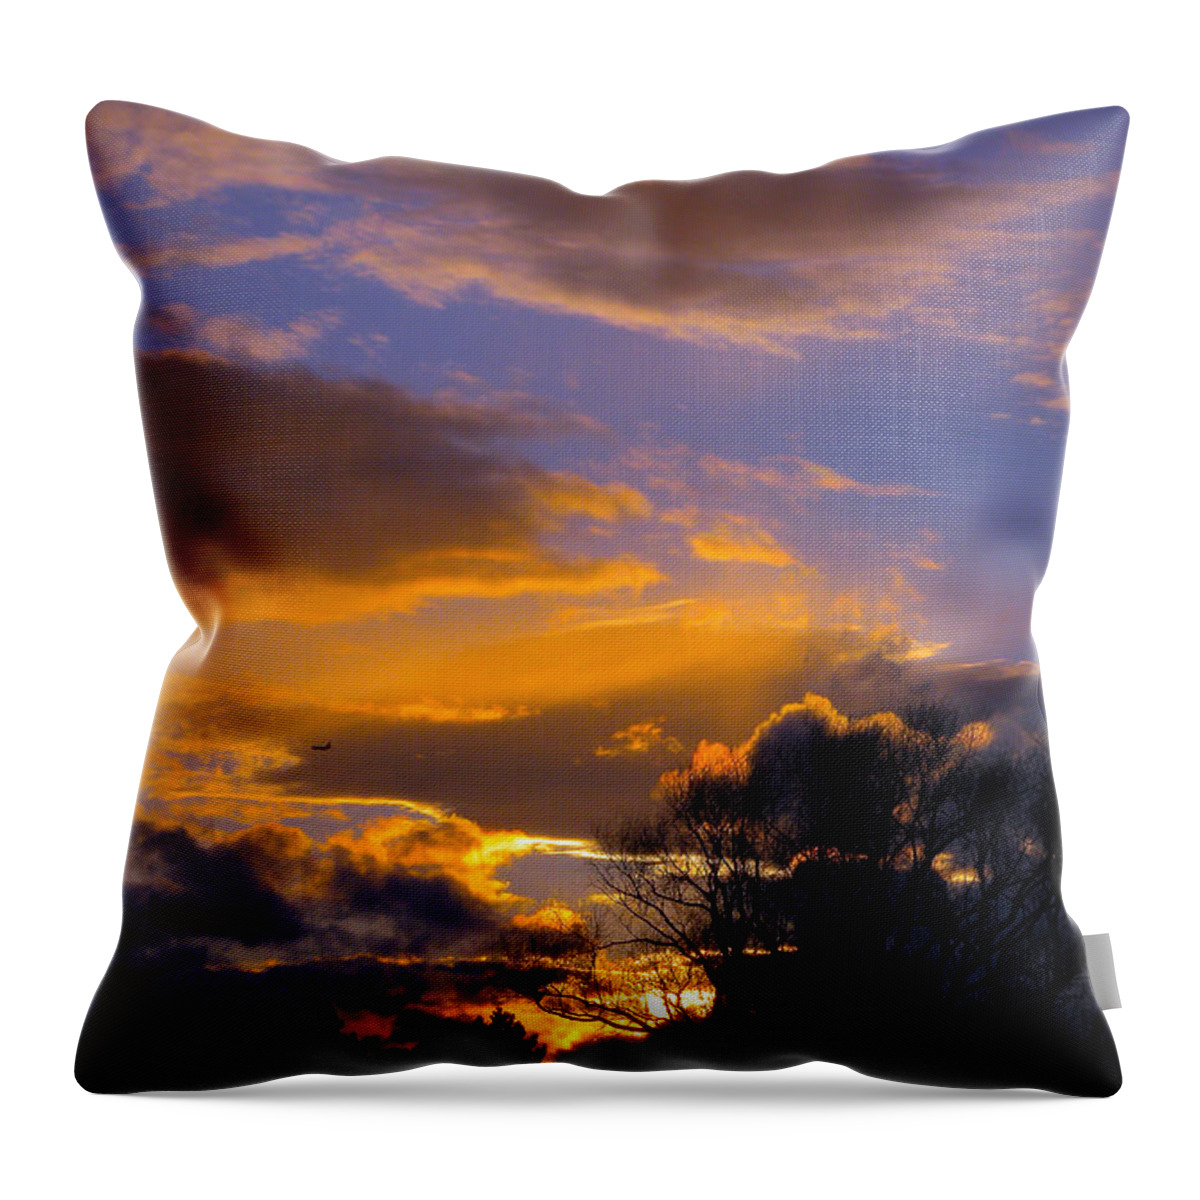 Sunset Throw Pillow featuring the photograph Winter Sunset by Dragan Kudjerski